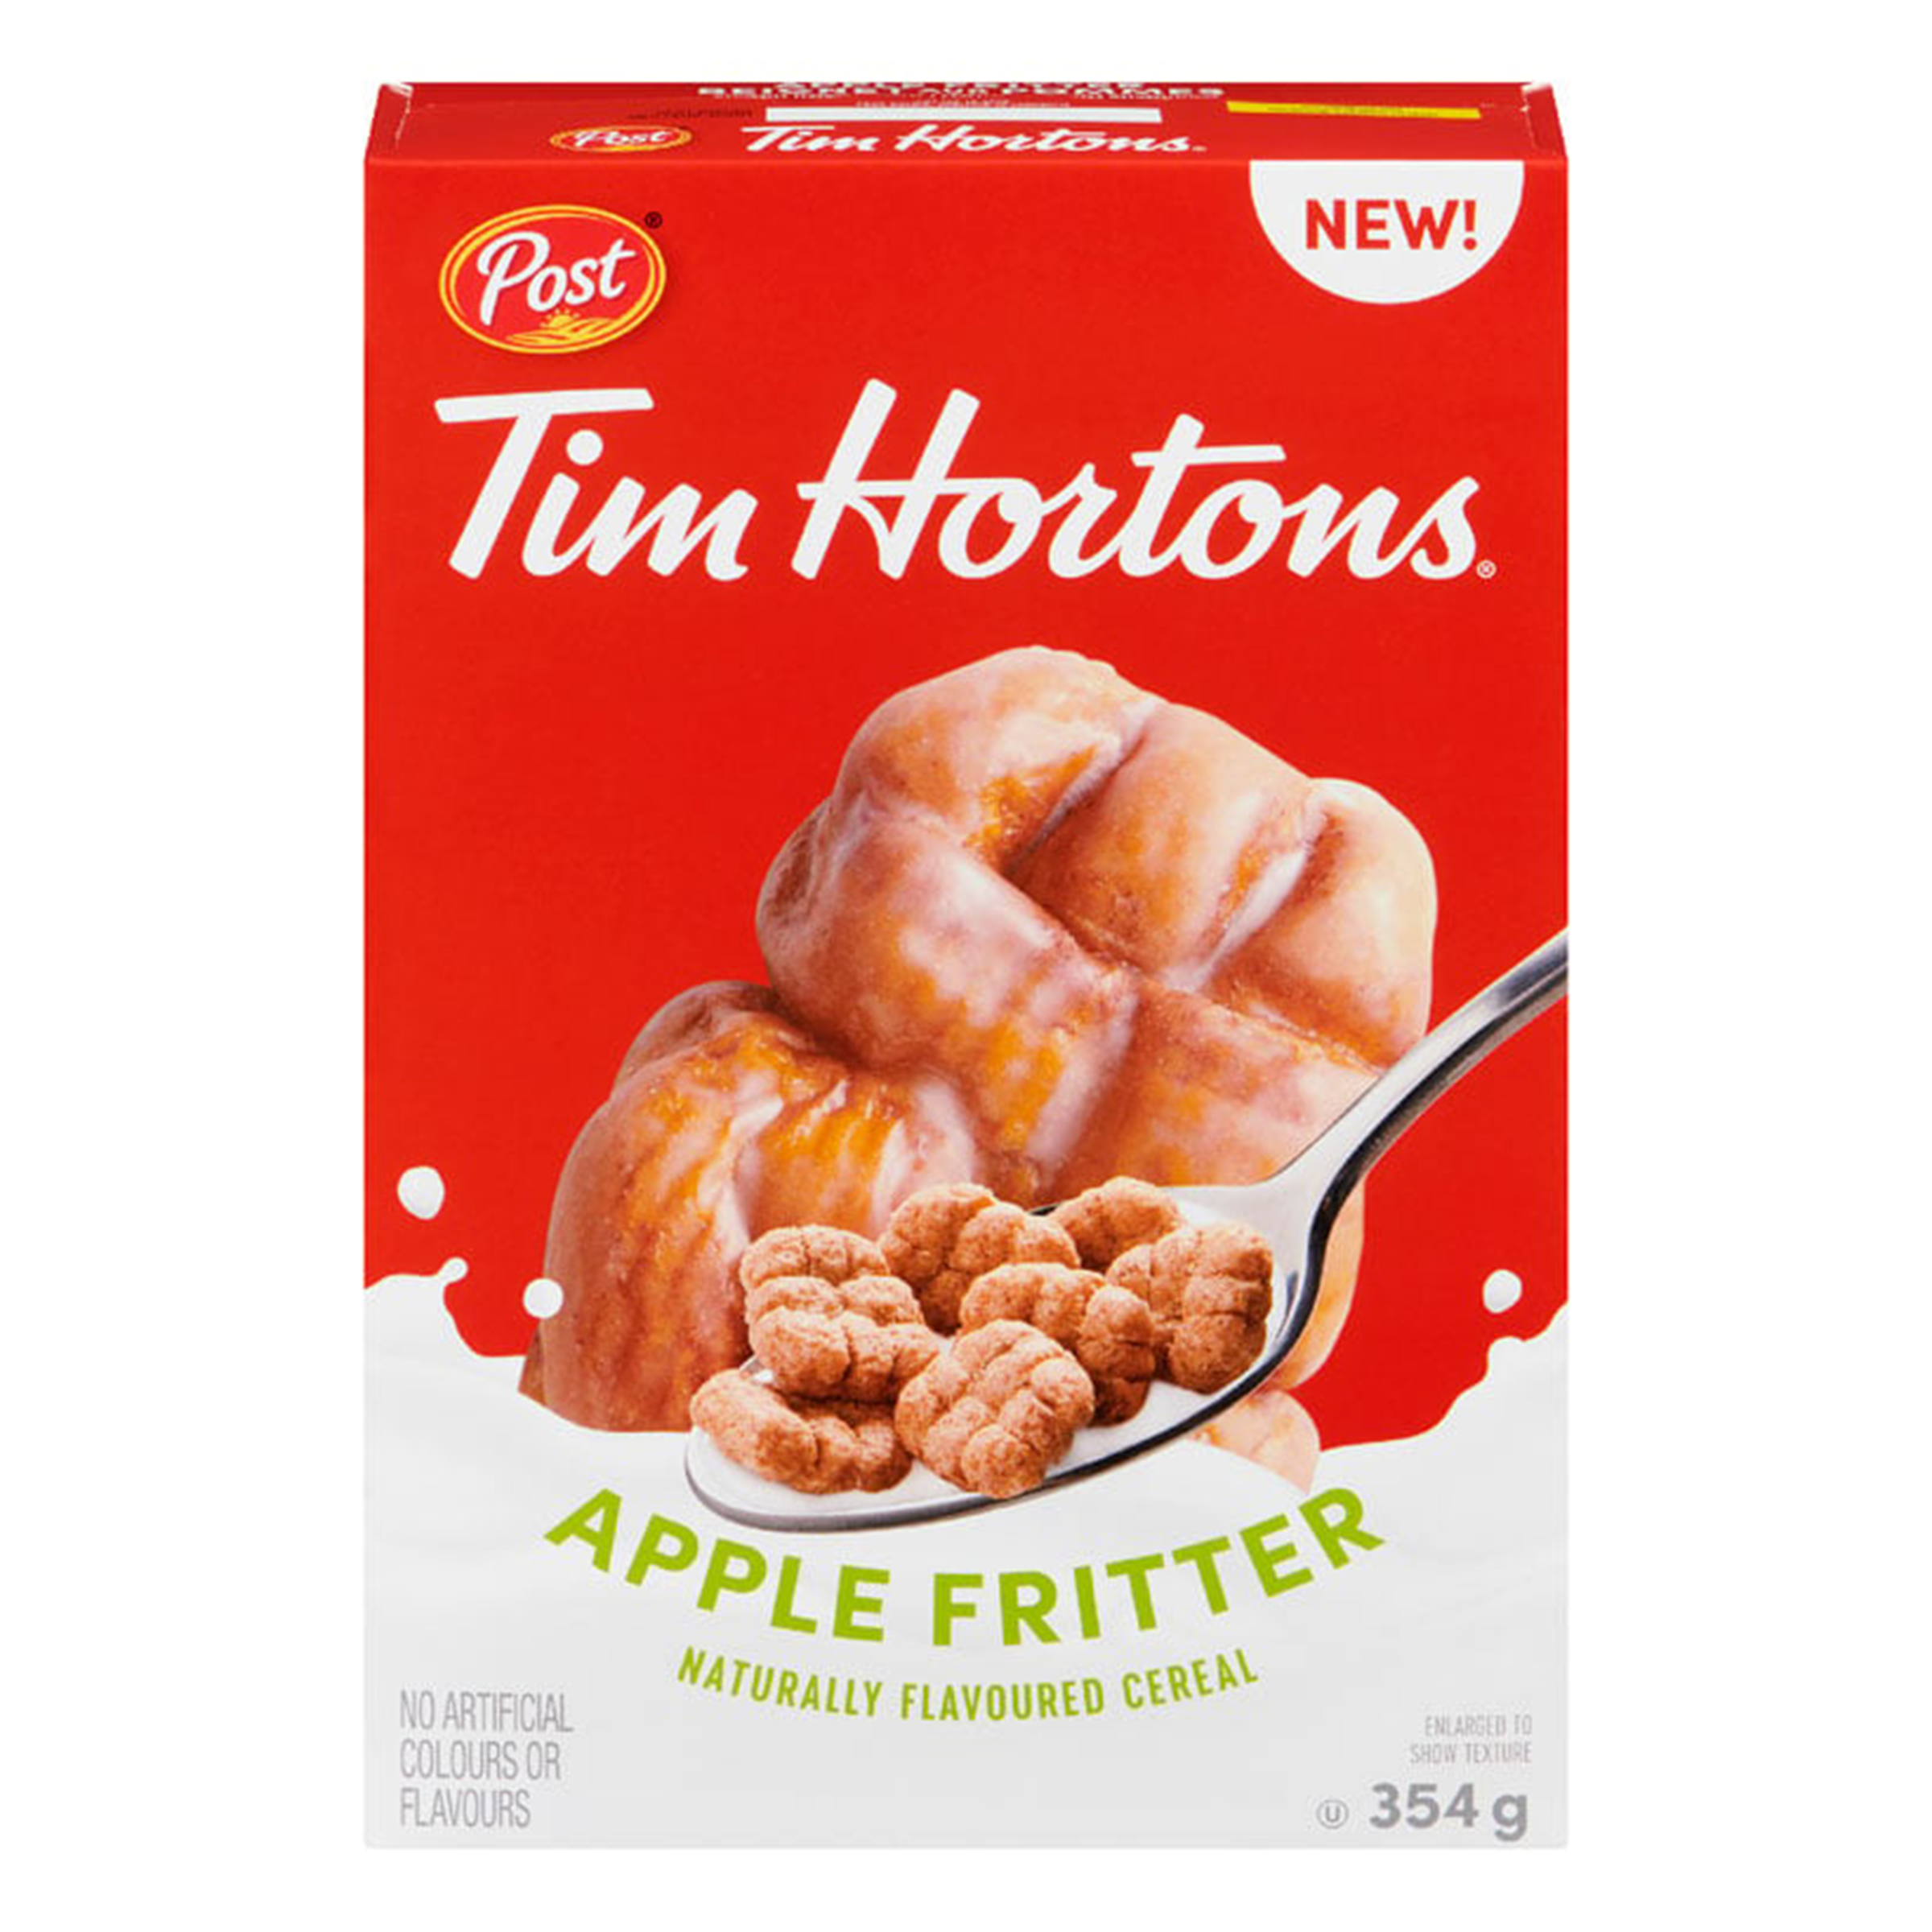 Tim Hortans - Apple Fritter Cereal